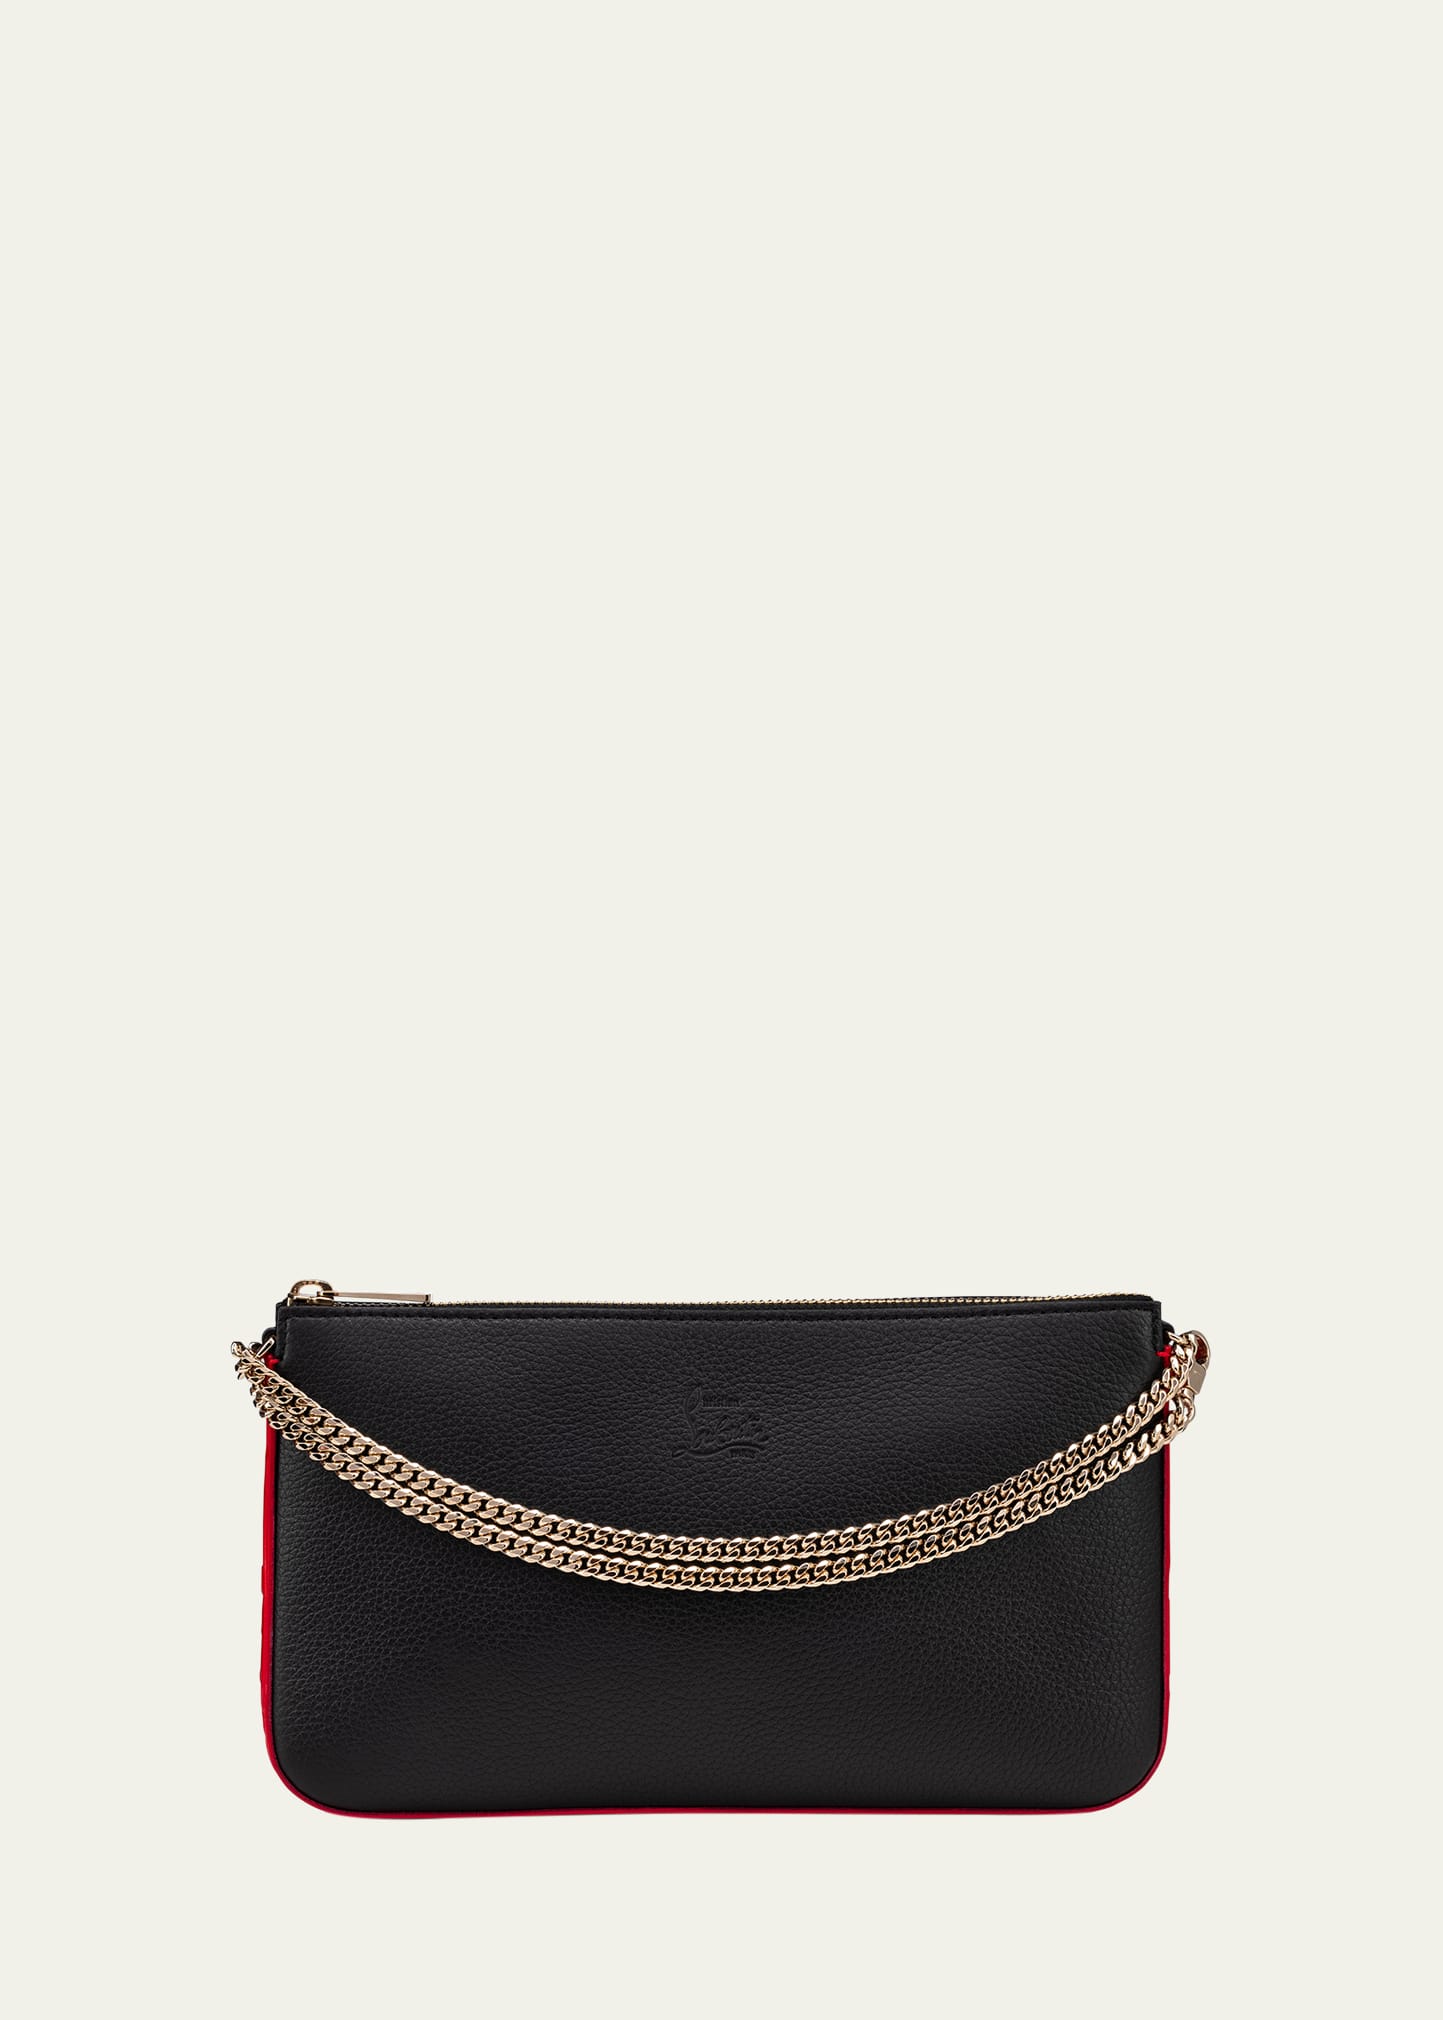 Loubila Shoulder Bag in Grained Leather